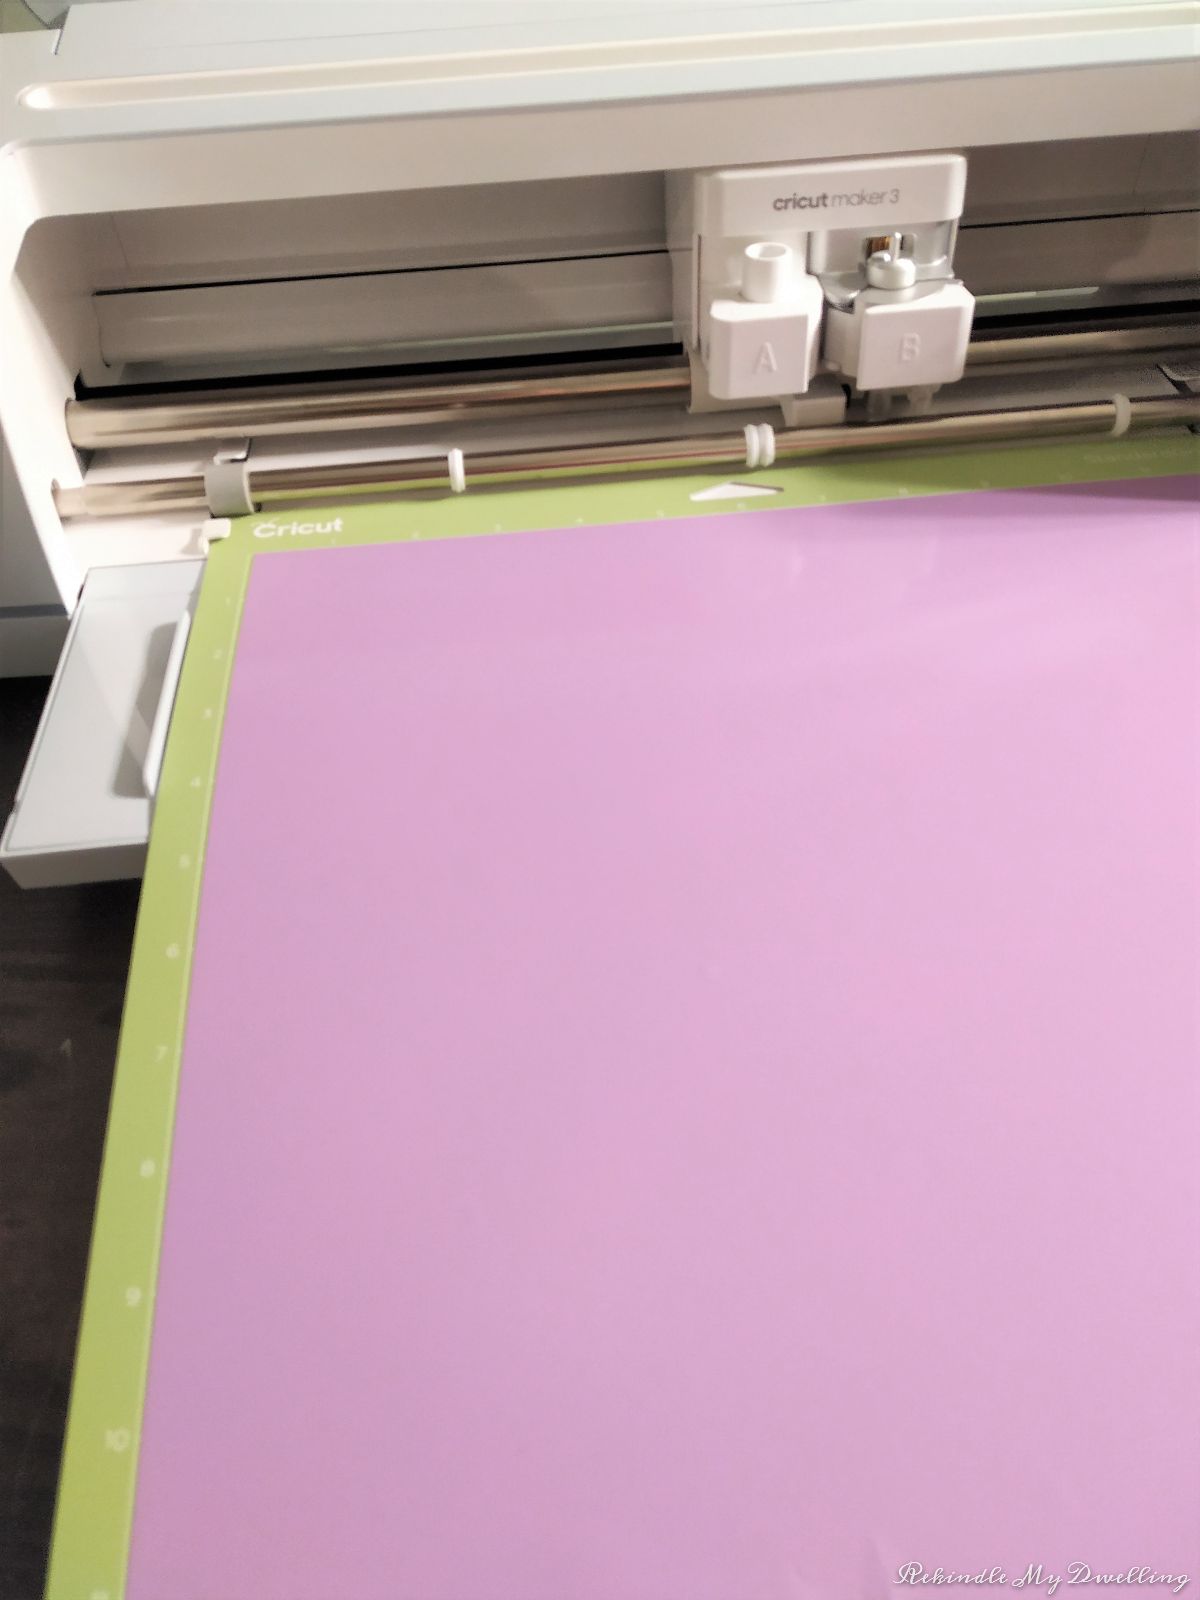 Loading purple vinyl into the Cricut machine.